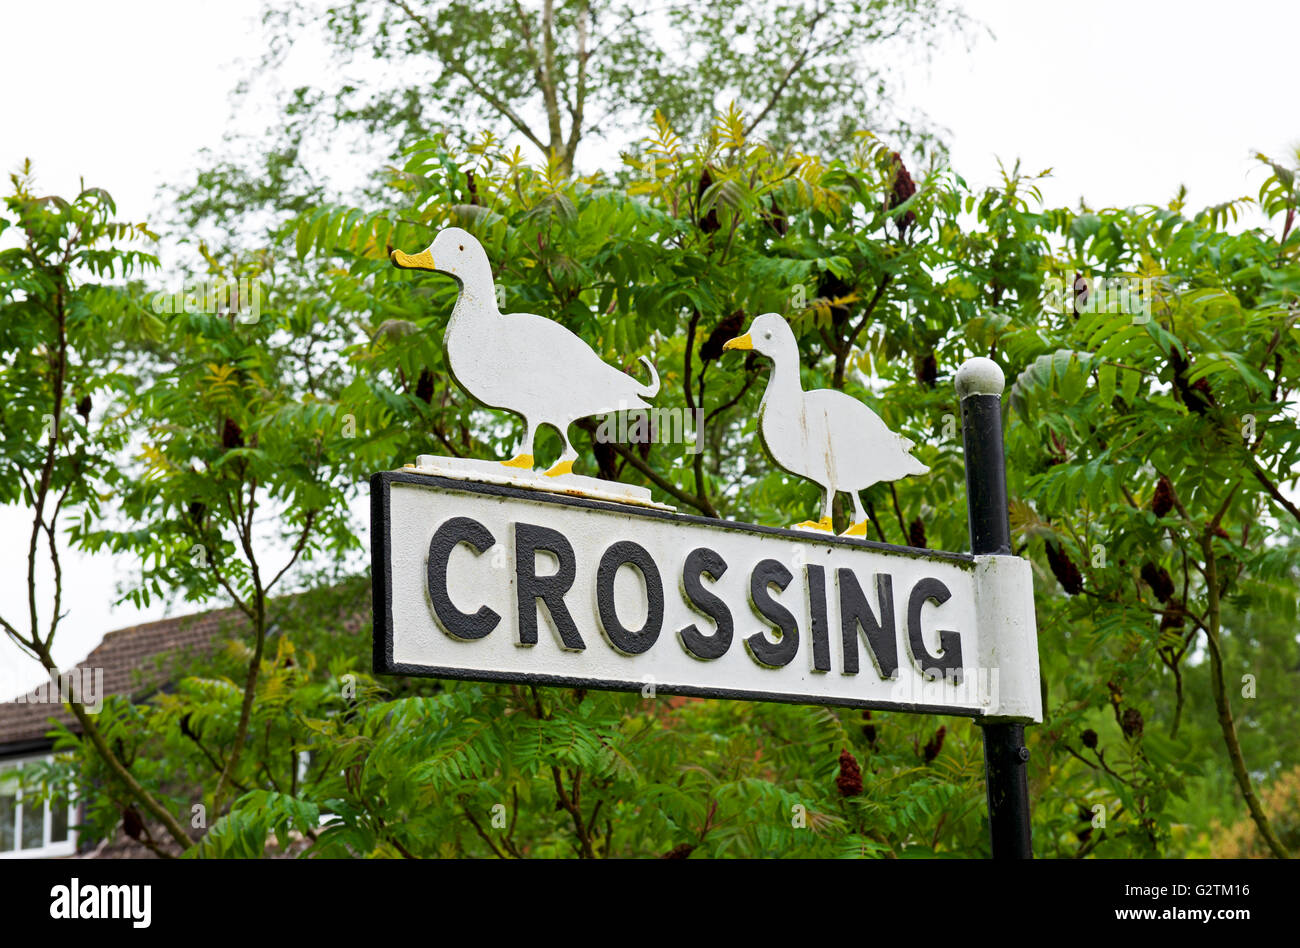 Sign - ducks crossing - England UK Stock Photo